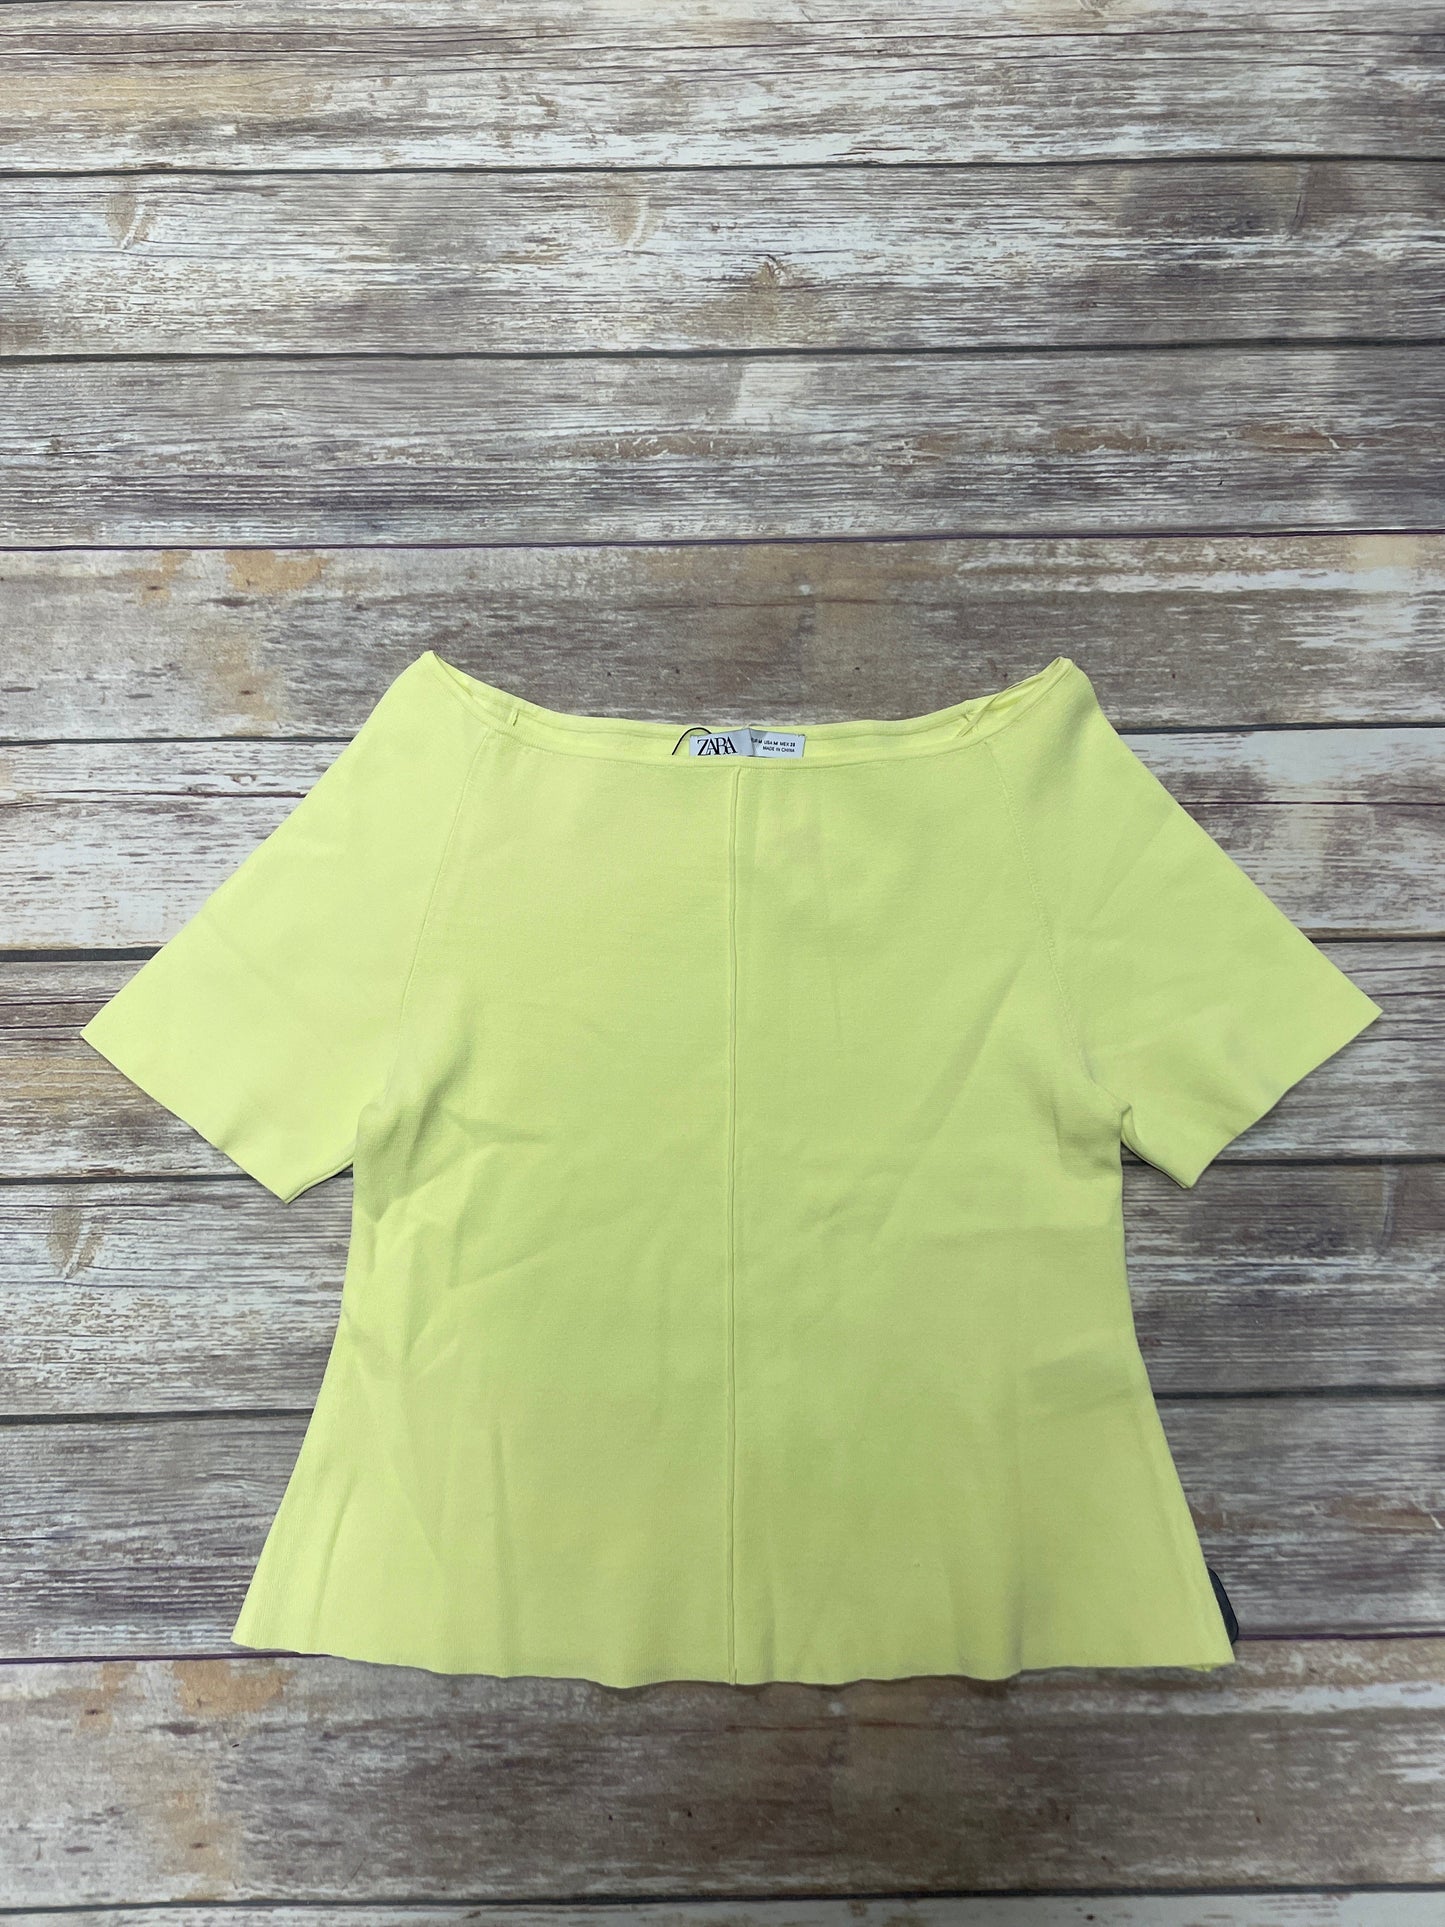 Yellow Top Short Sleeve Zara, Size M